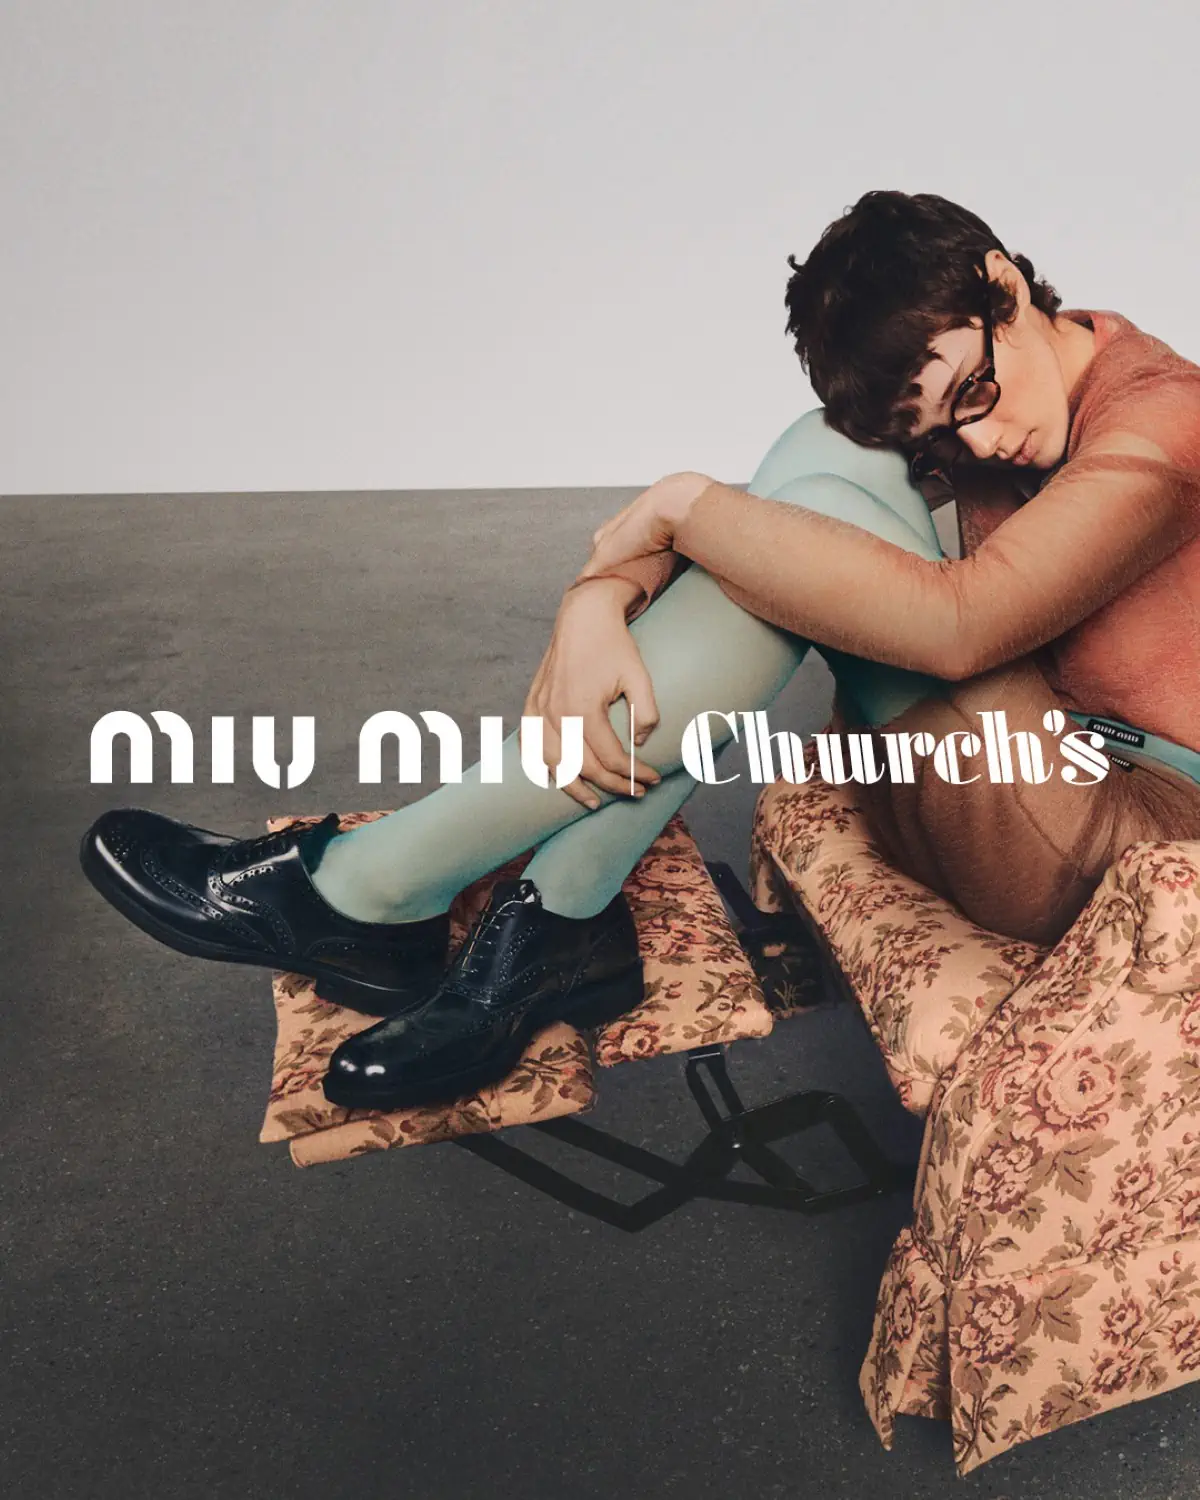 A family footwear fusion spotlights Church’s x Miu Miu partnership